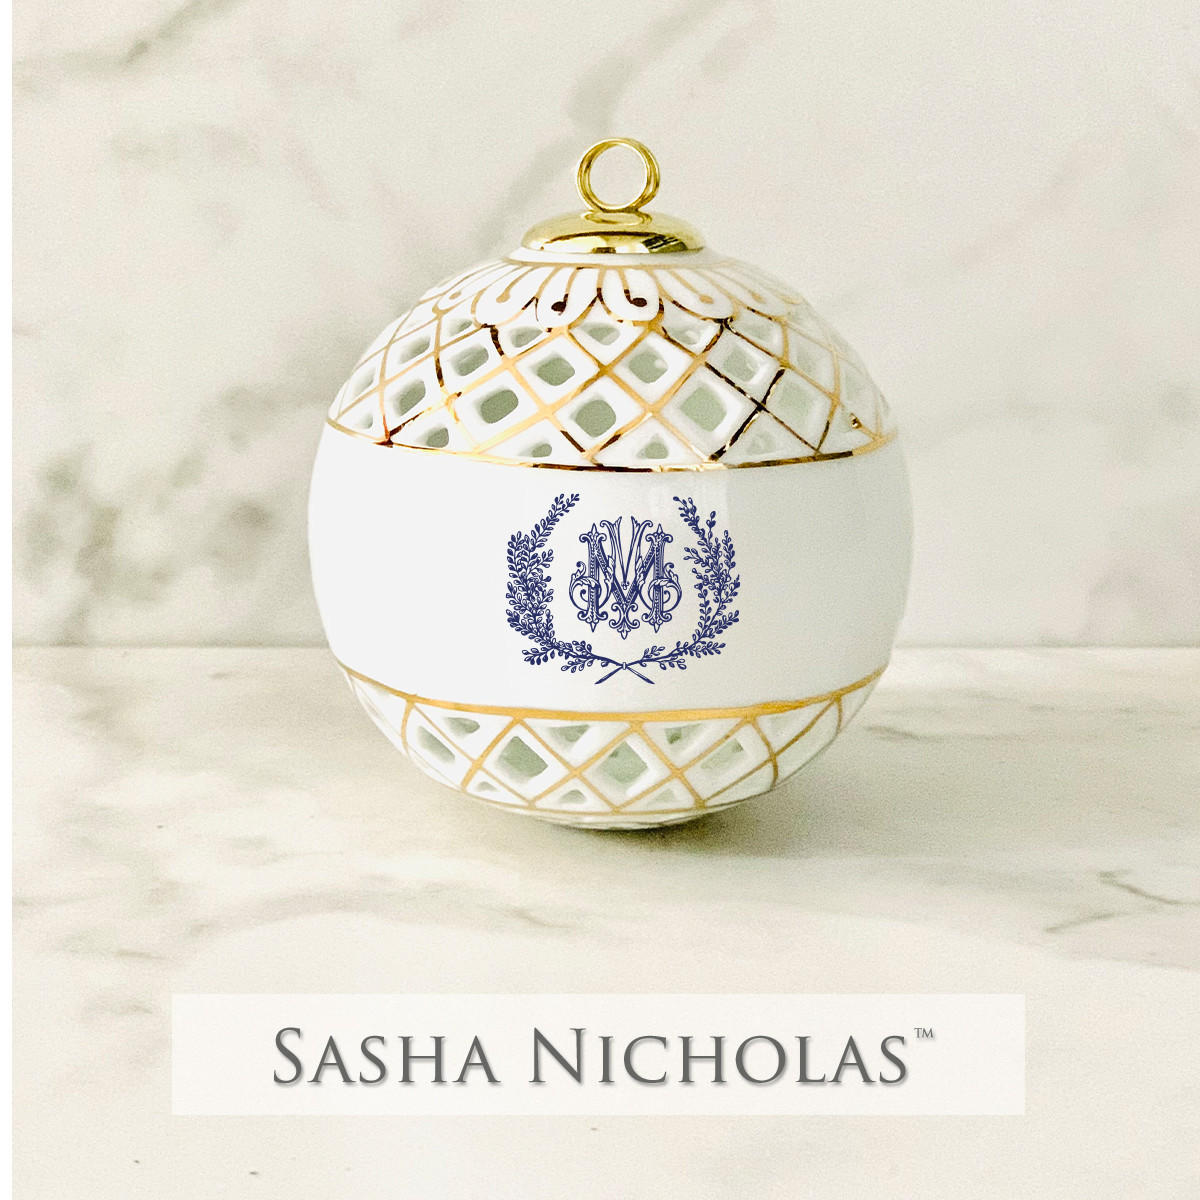 Sasha Nicholas England-Lee Openwork Ball Ornament 